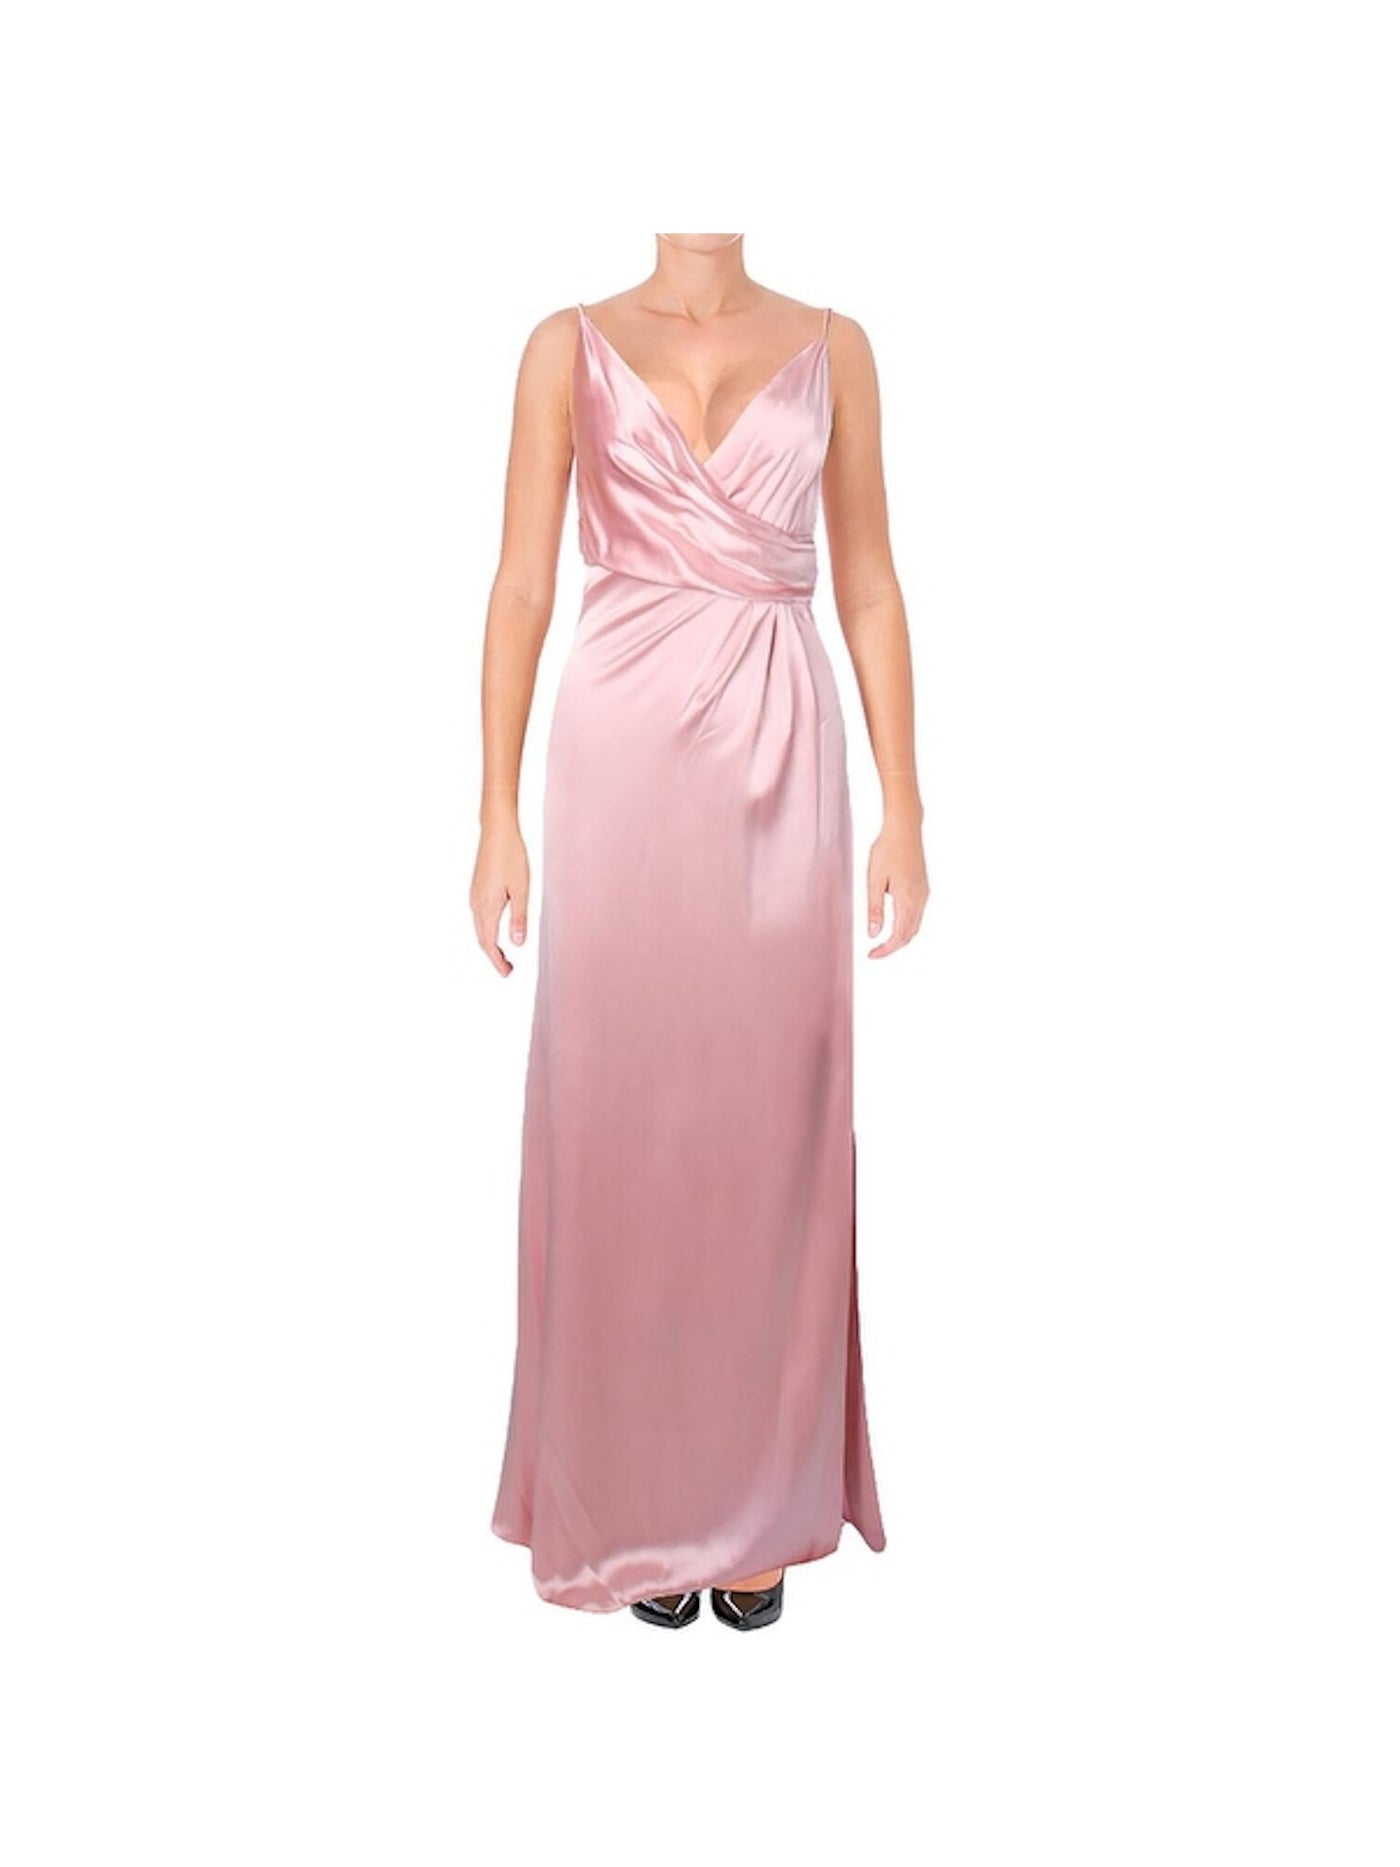 JILL STUART Womens Pink Spaghetti Strap Full-Length Sheath Cocktail Dress 2